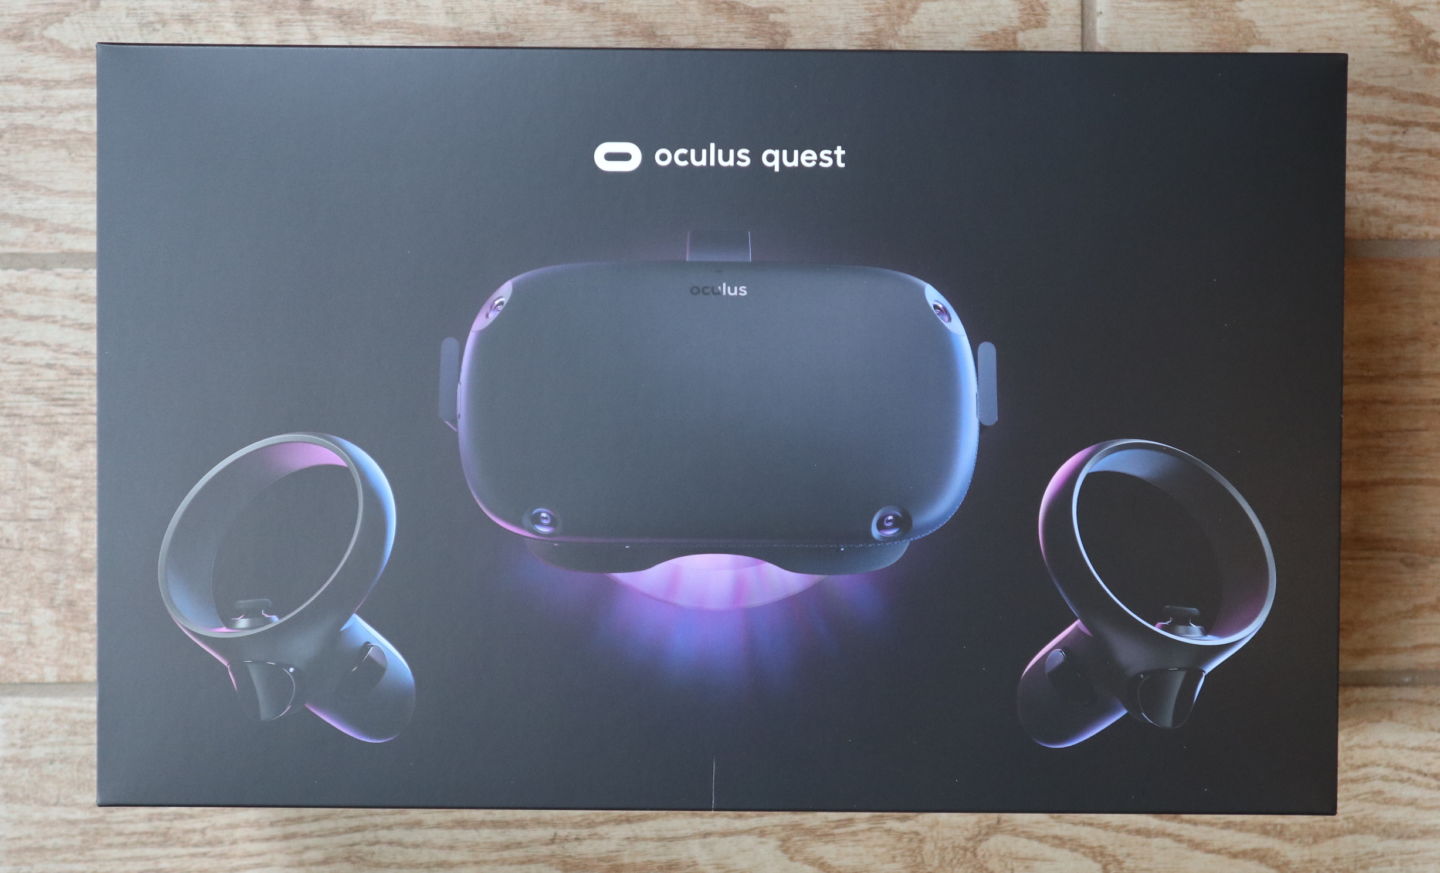 oculus quest in the box